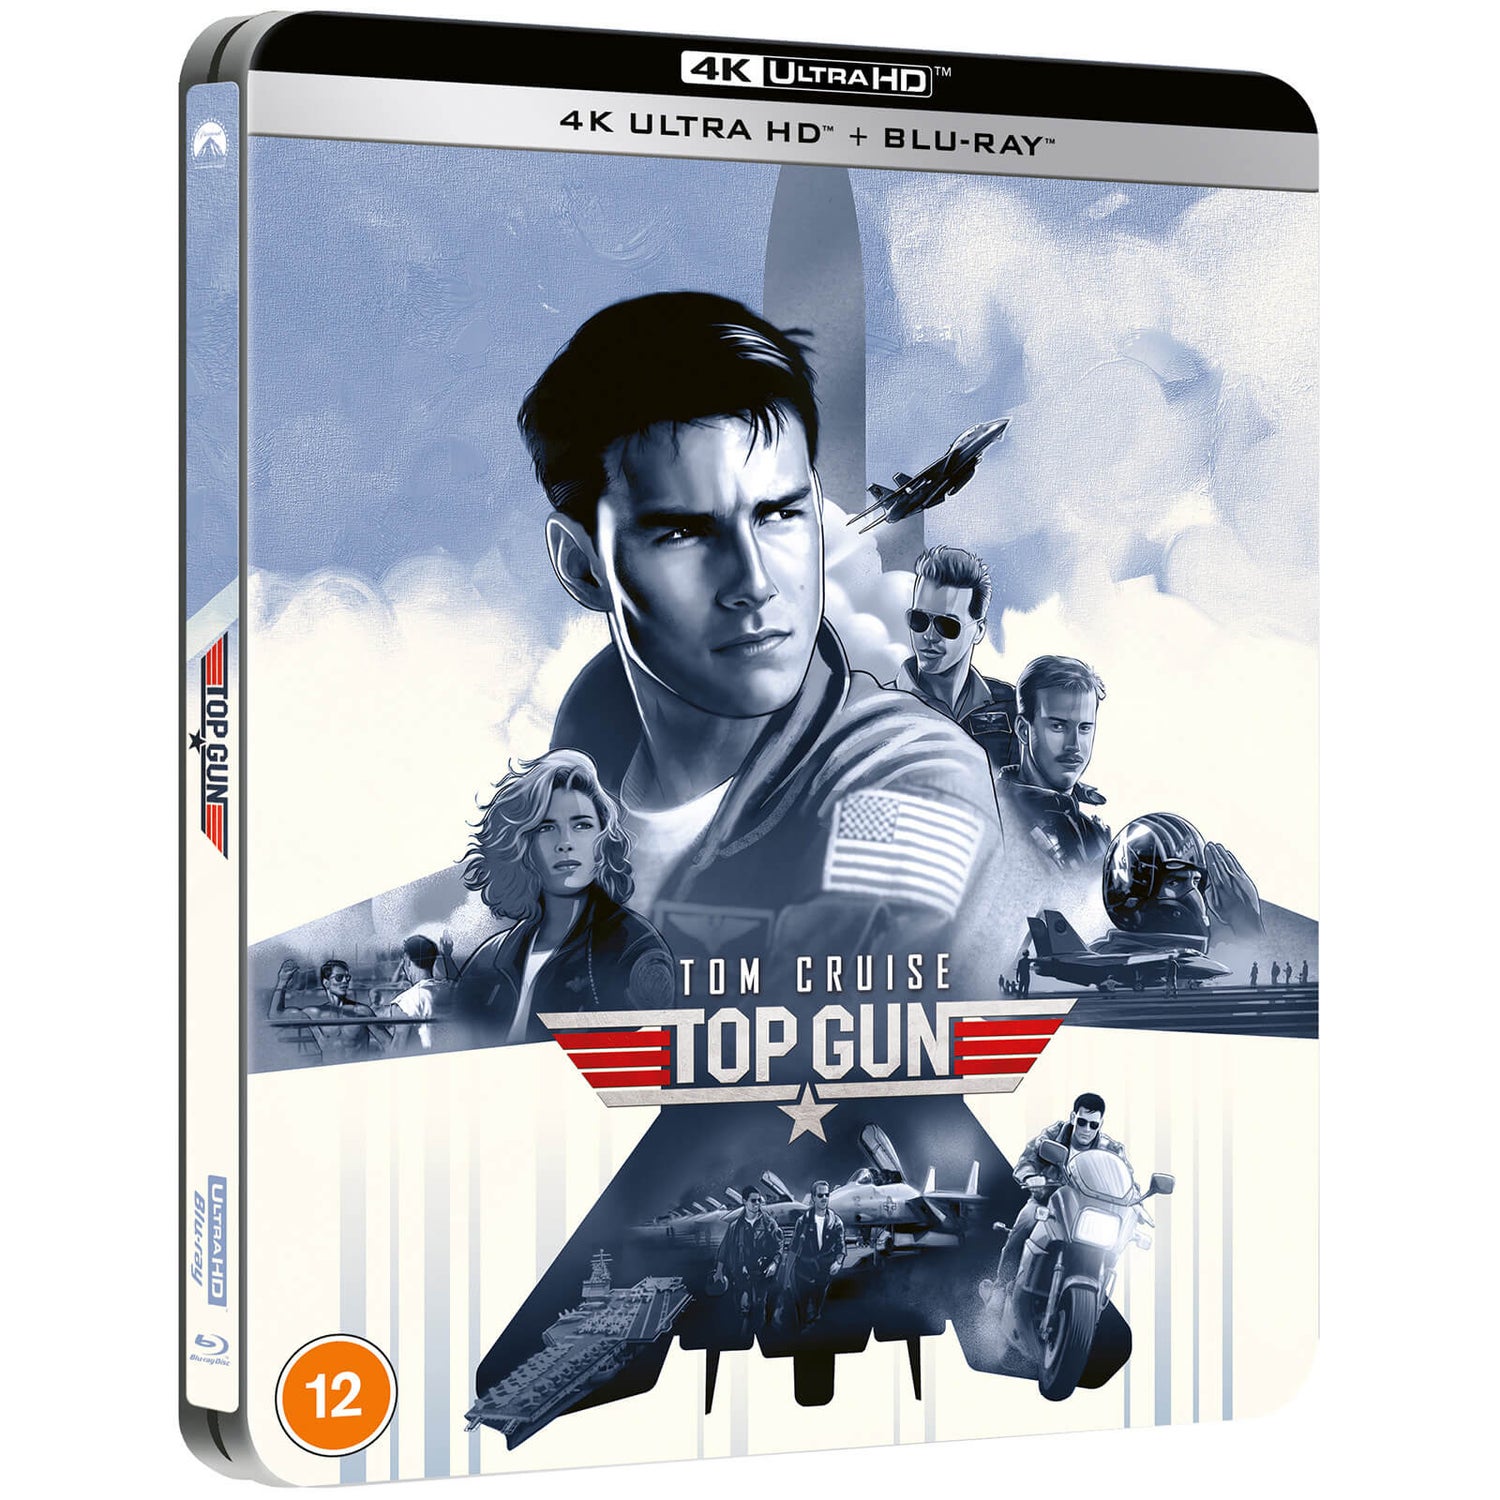 Top Gun - Limited Edition 4K Ultra HD Steelbook (Includes Blu-ray)